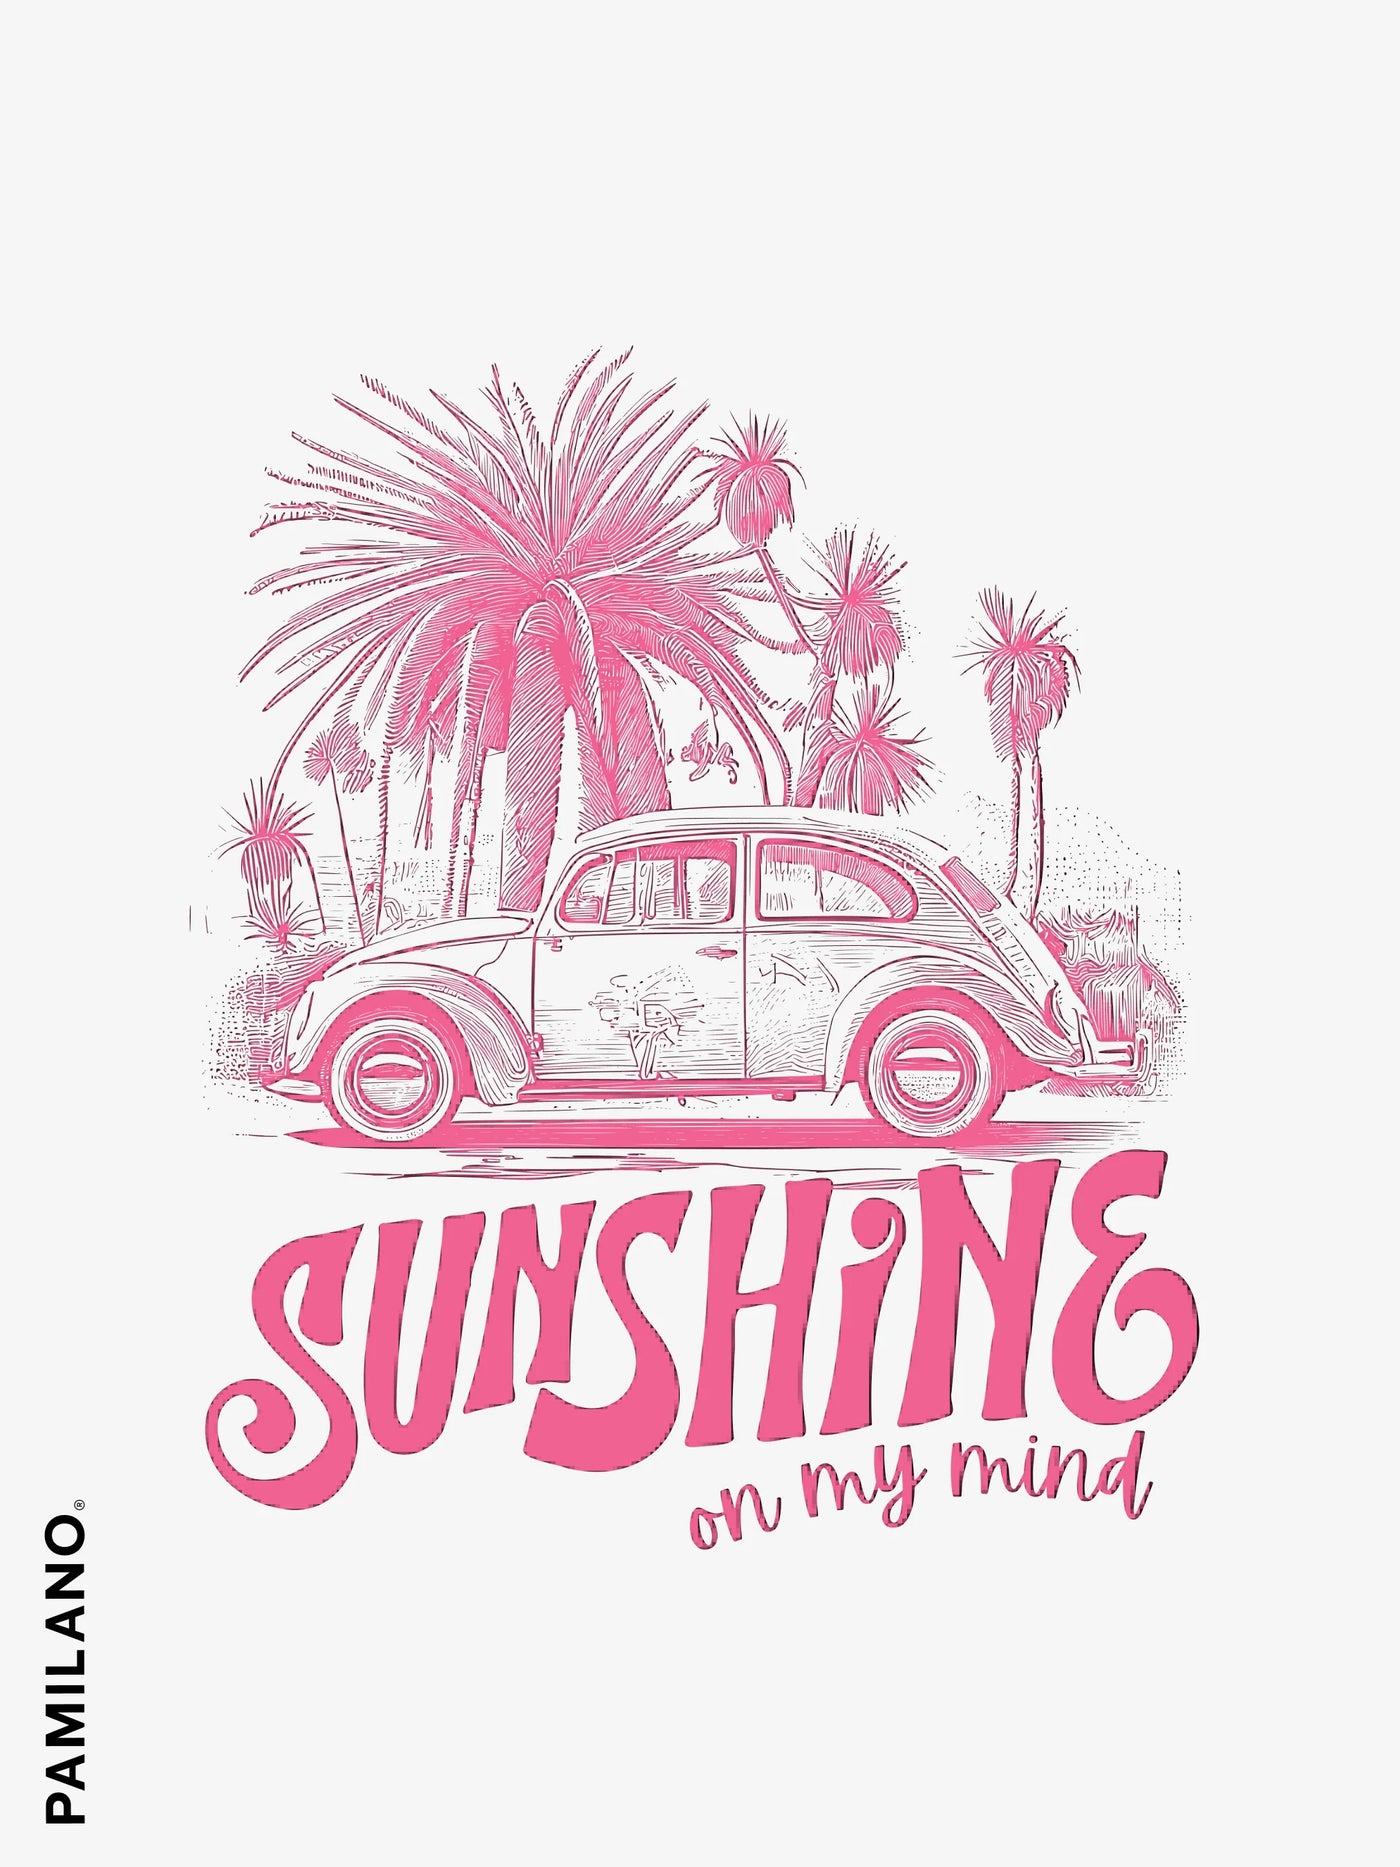 Sunshine t-shirt